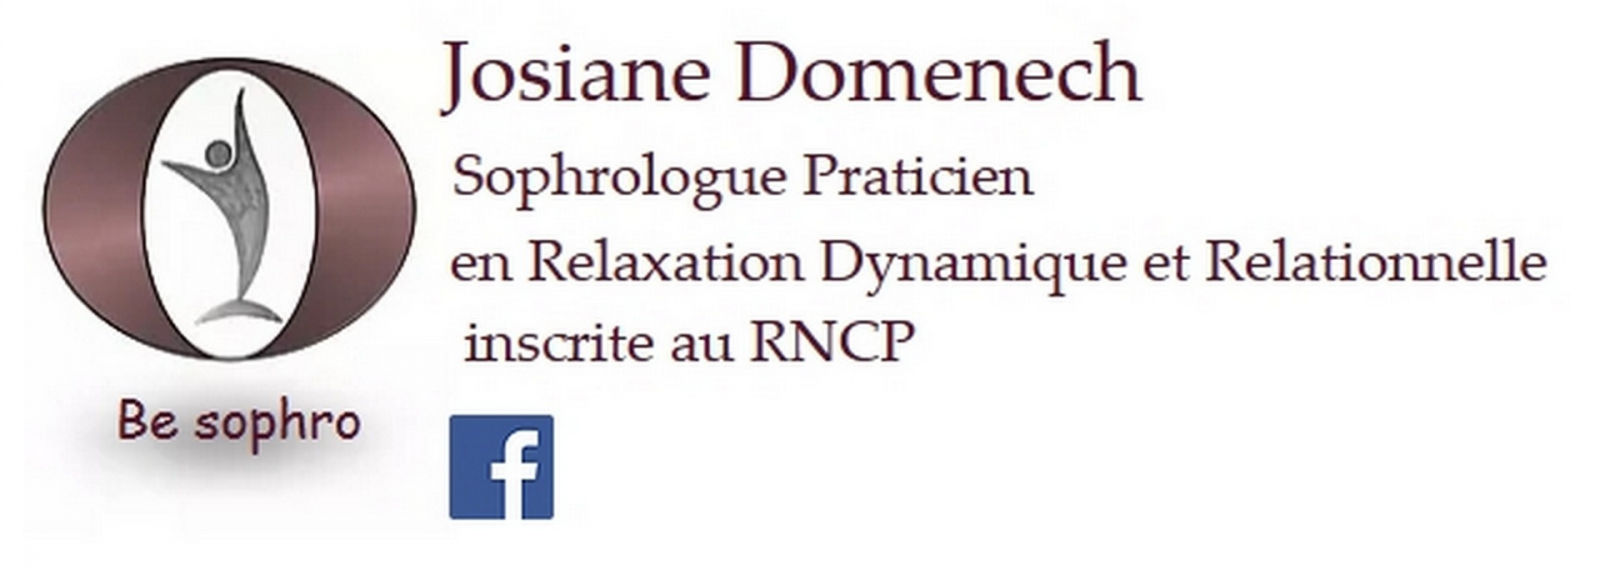 Josiane Domenech Sophrologue